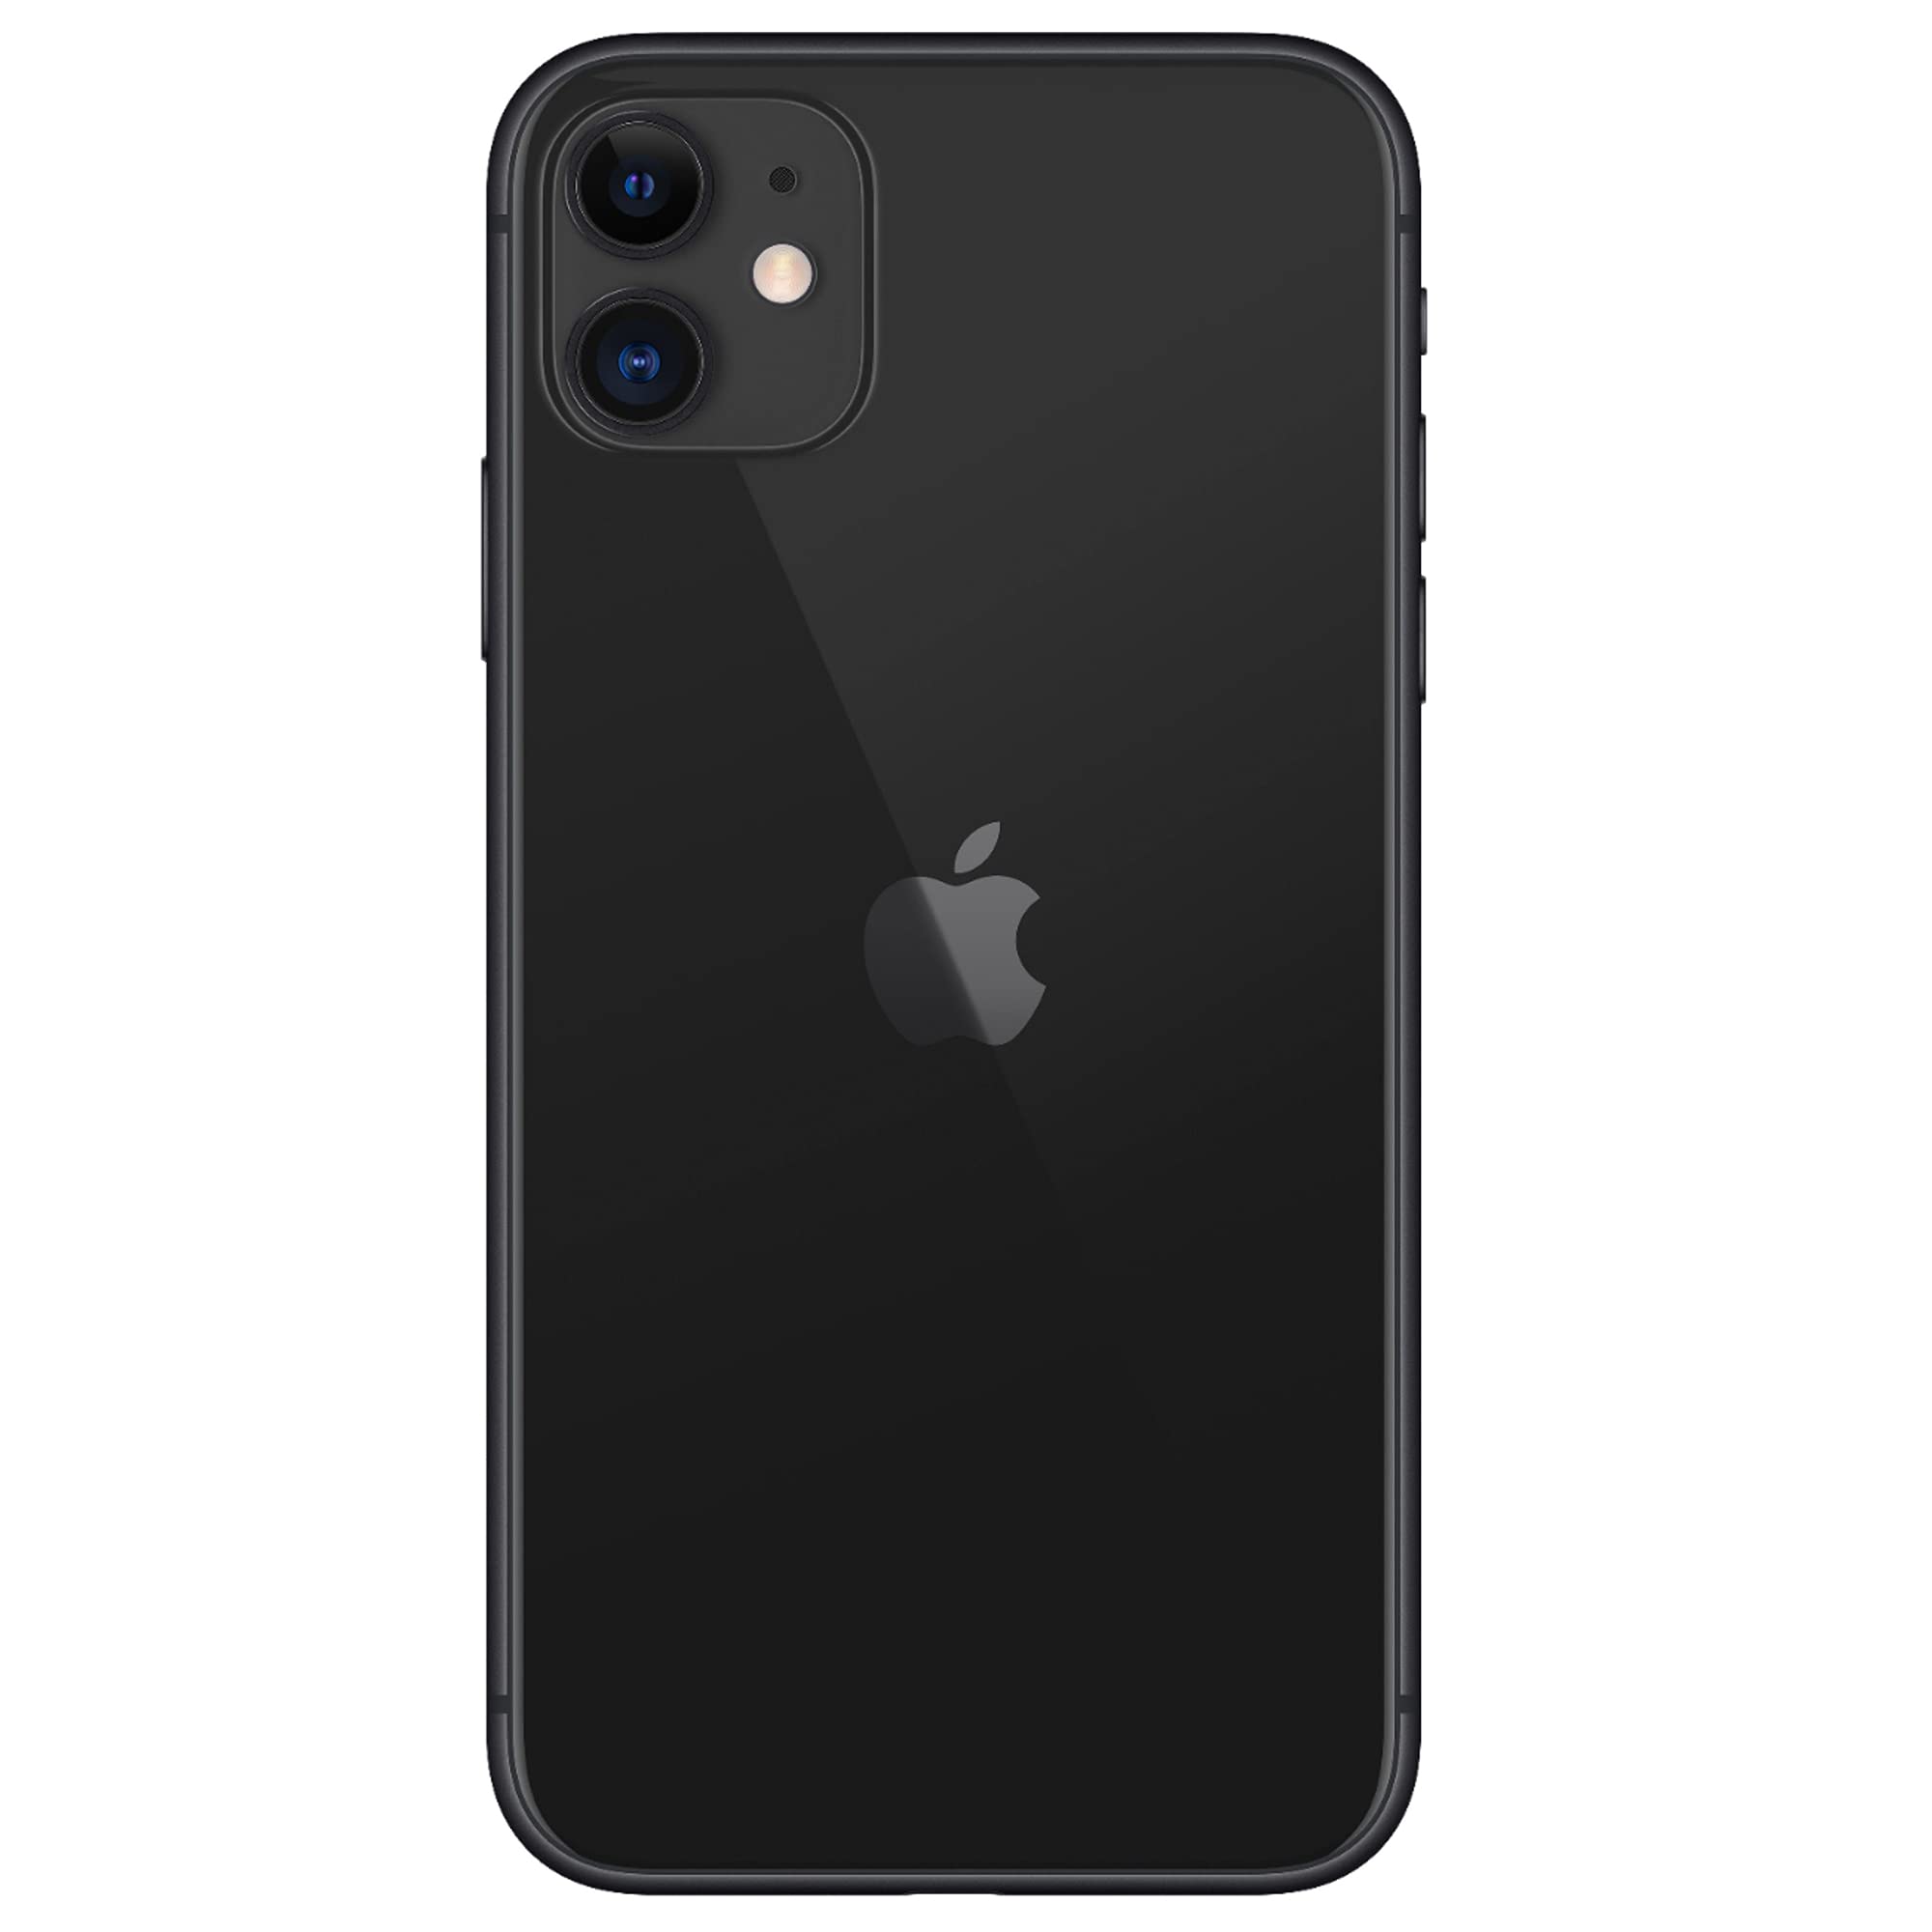 Apple iPhone 11, 128GB, Black - Unlocked (Renewed Premium)